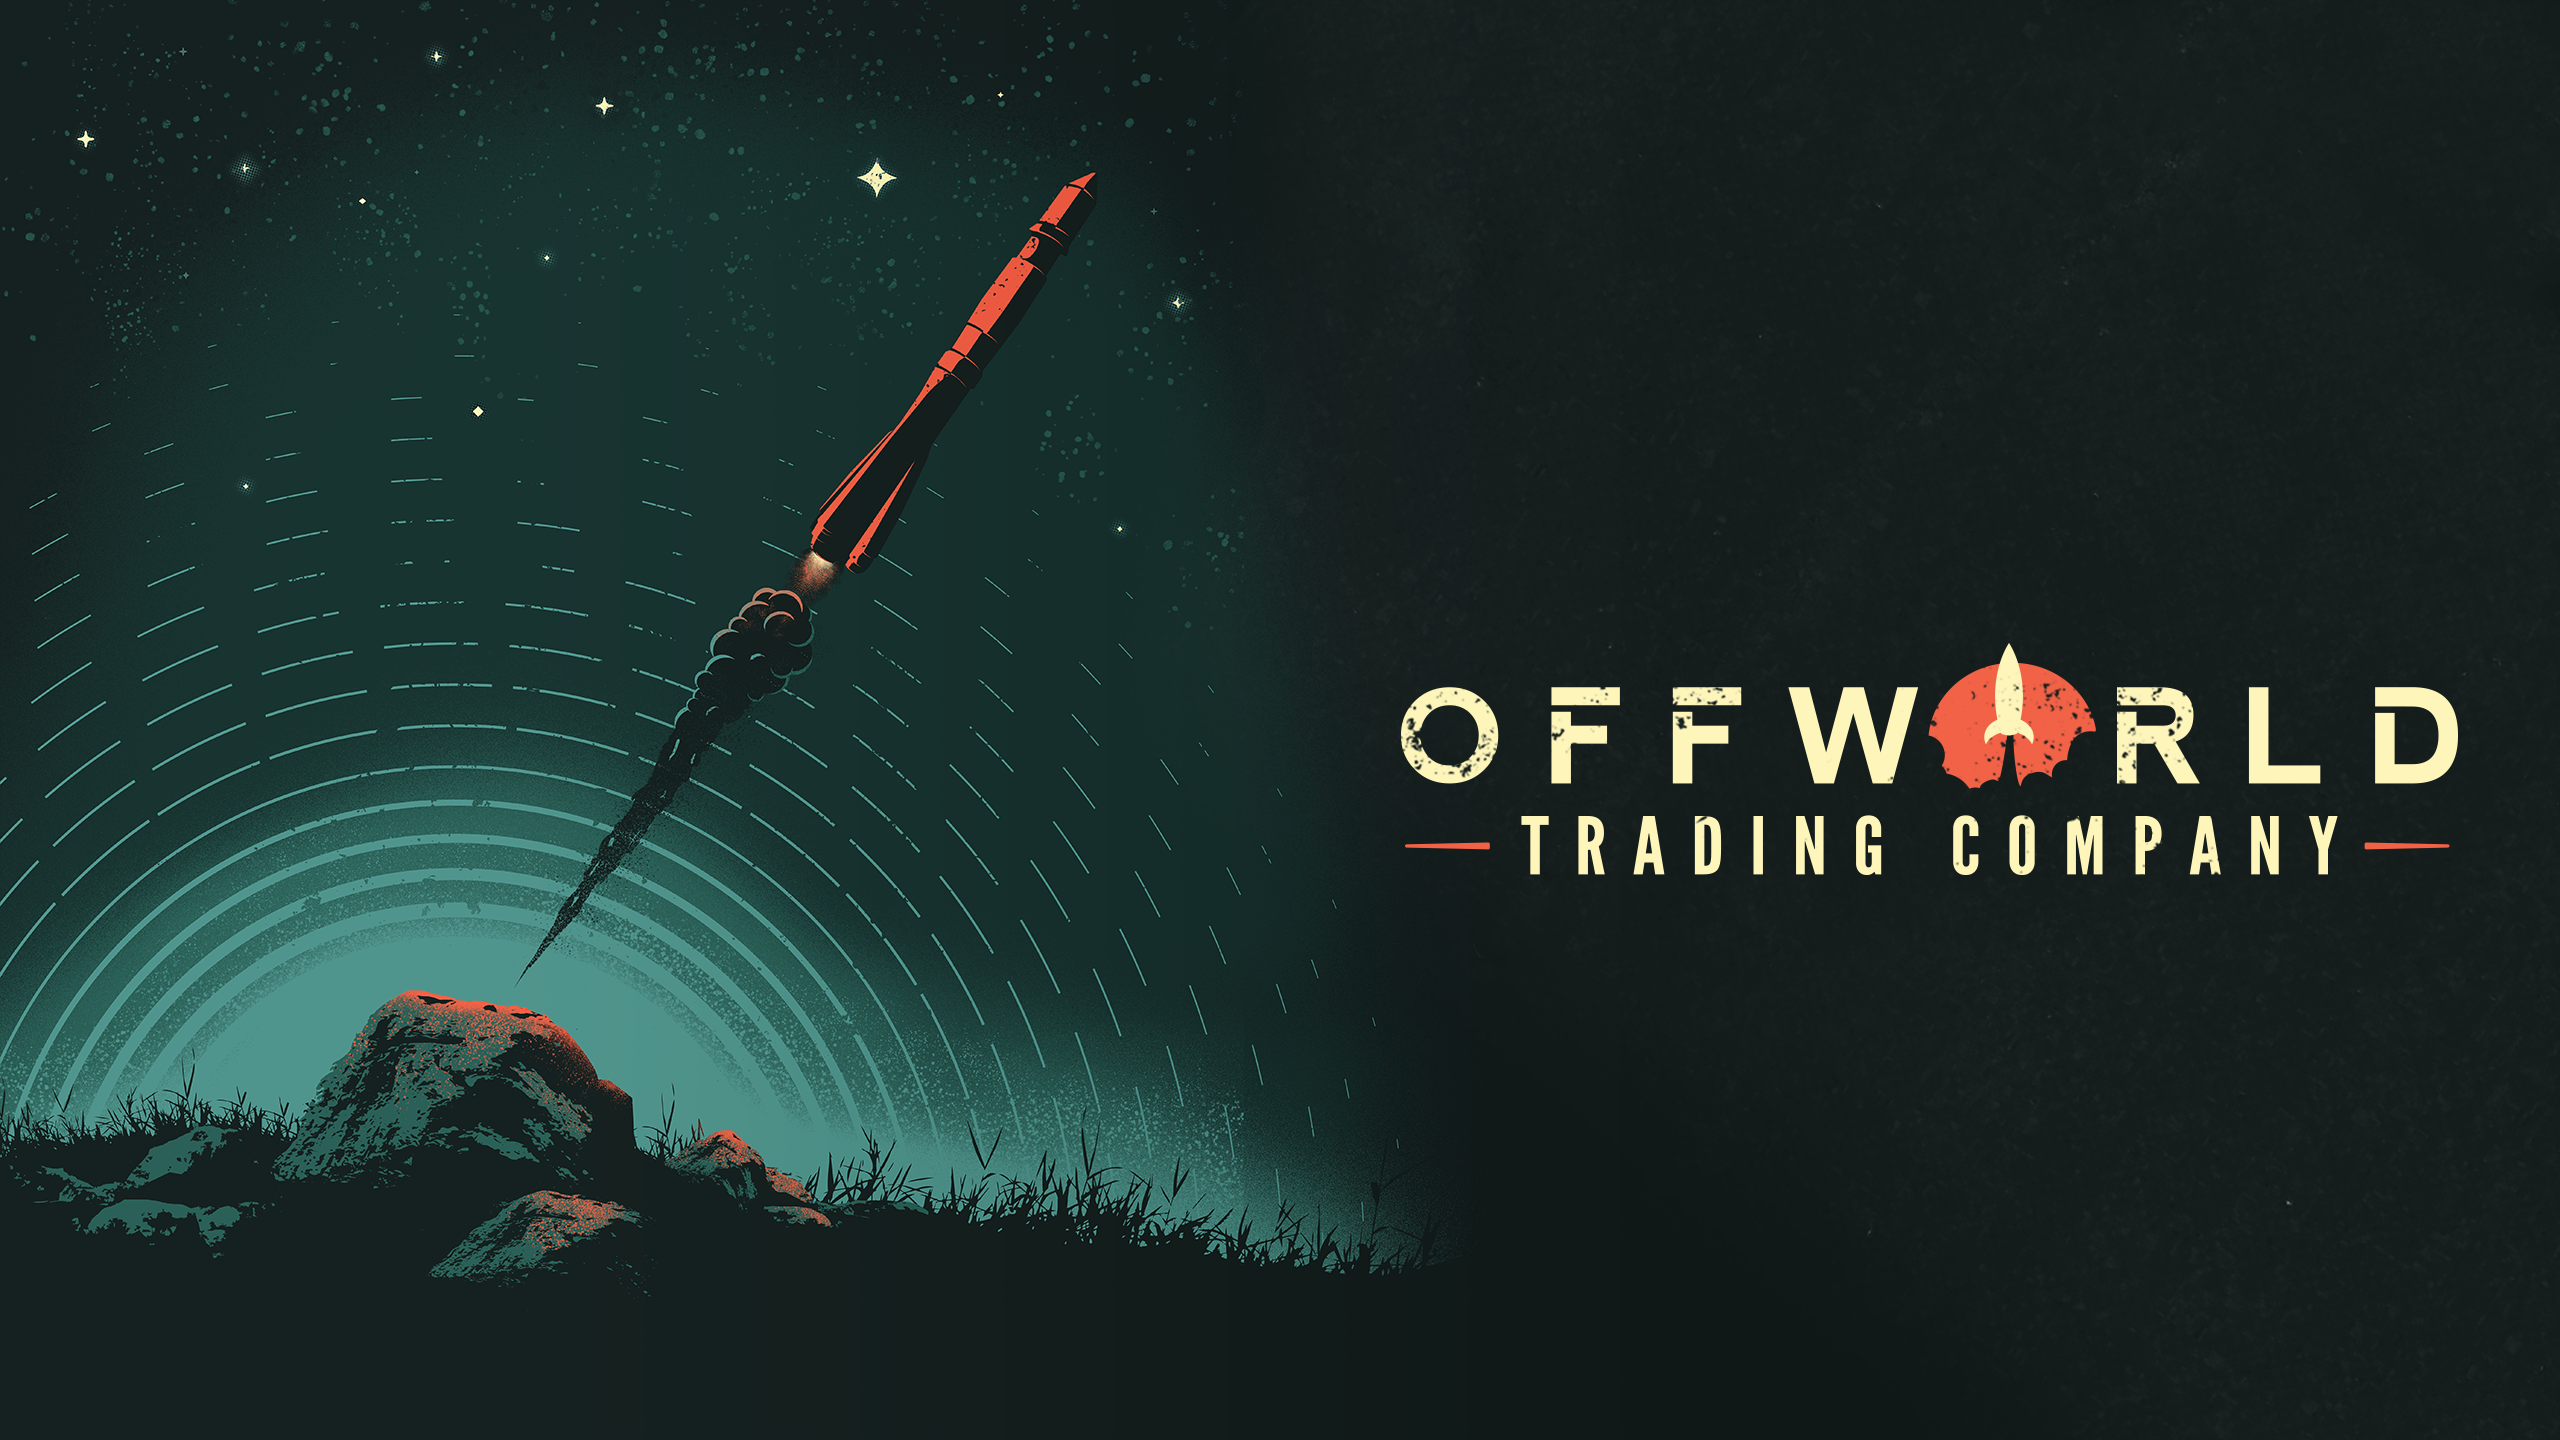 steam offworld trading company